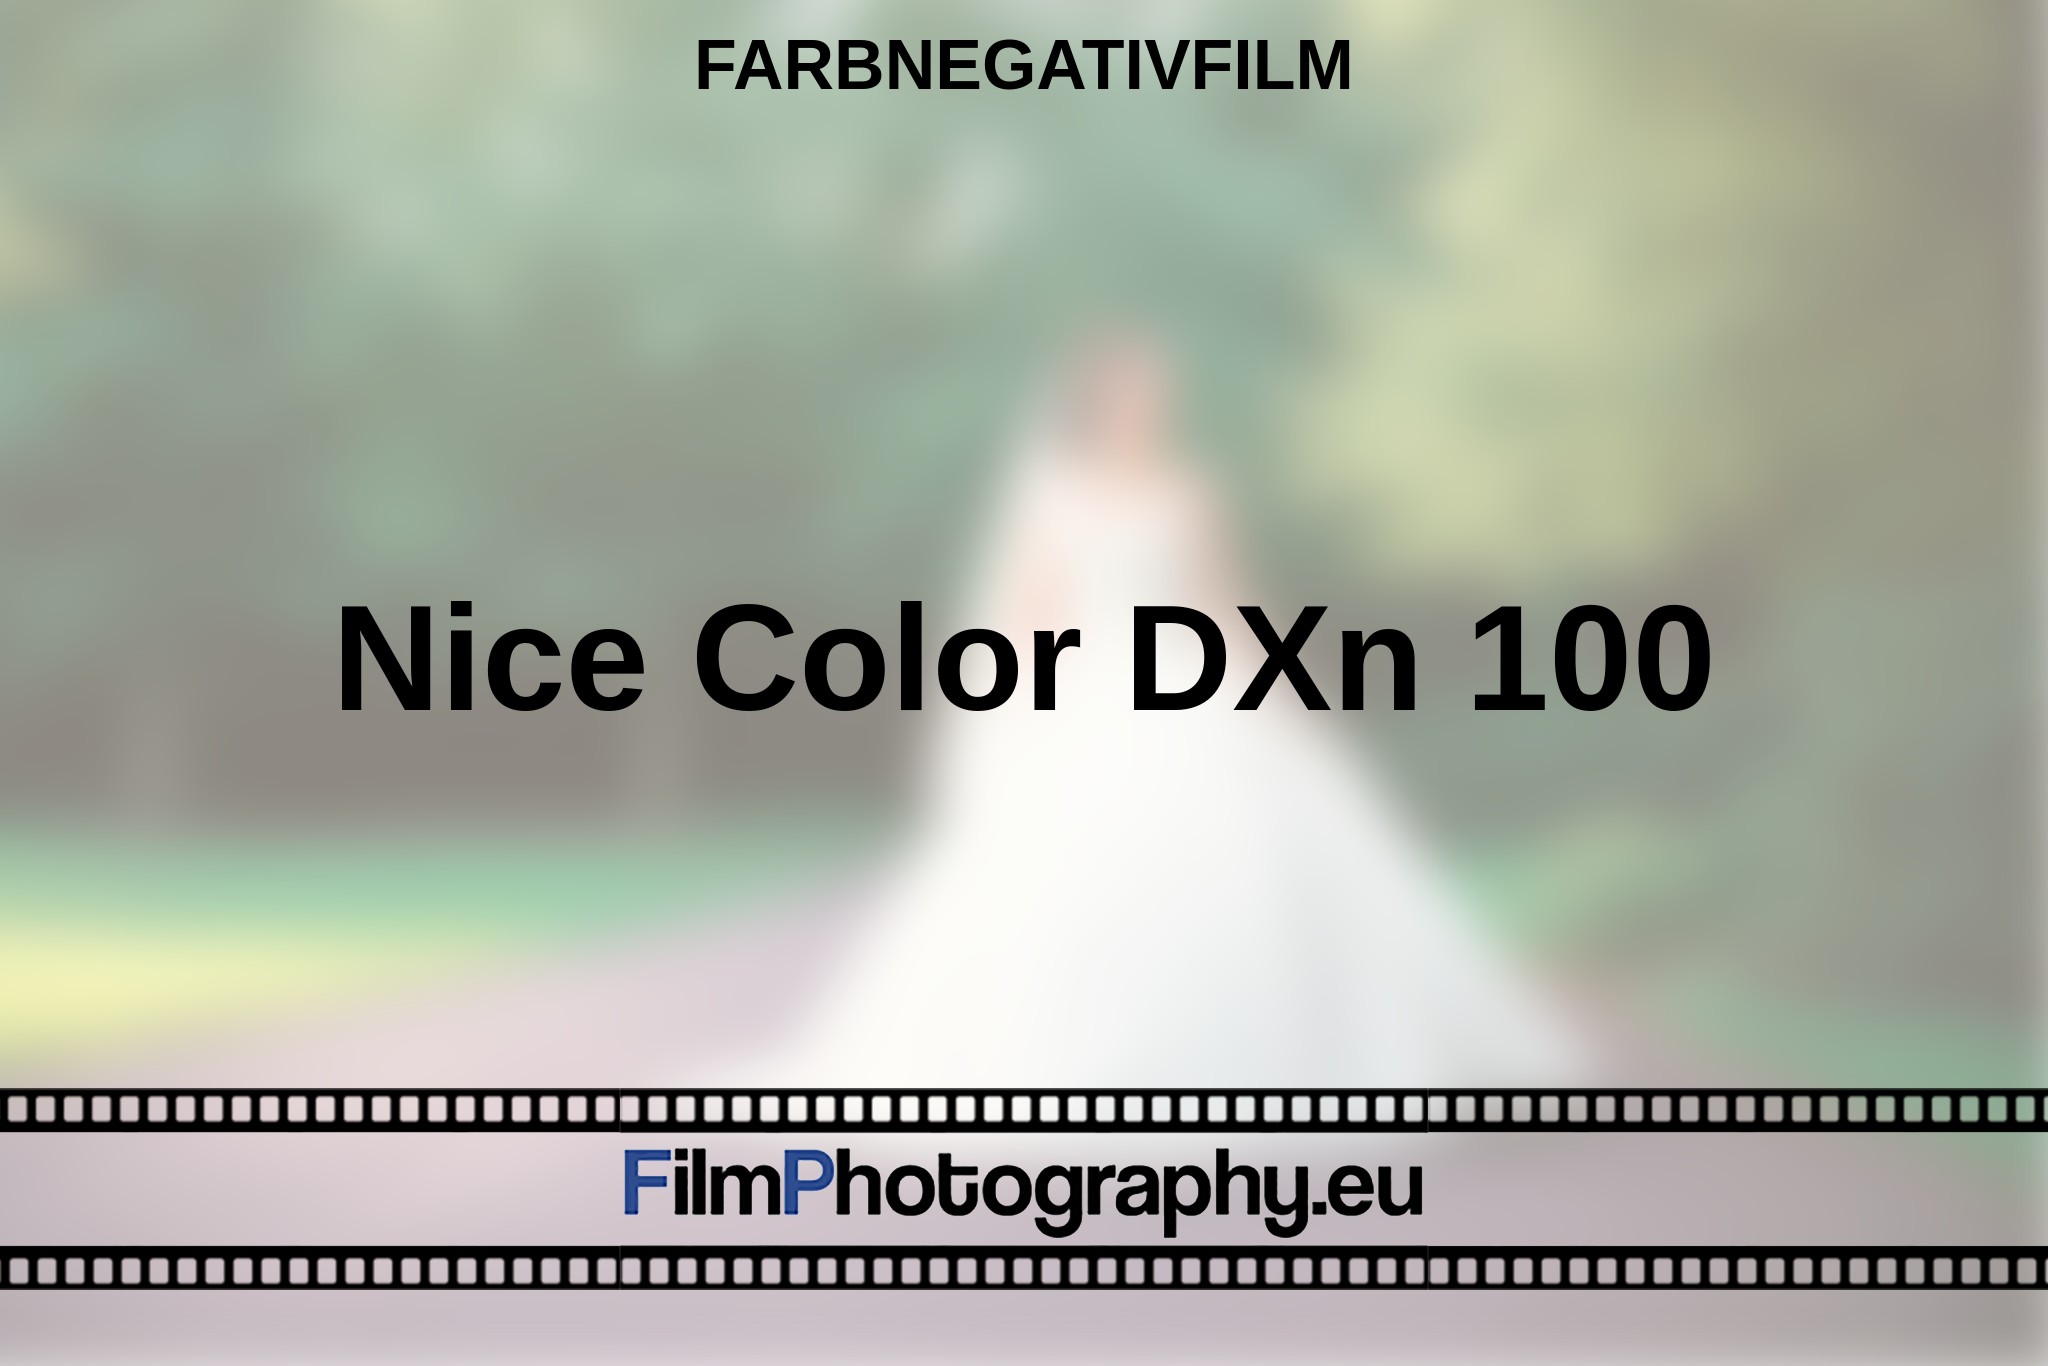 nice-color-dxn-100-farbnegativfilm-bnv.jpg